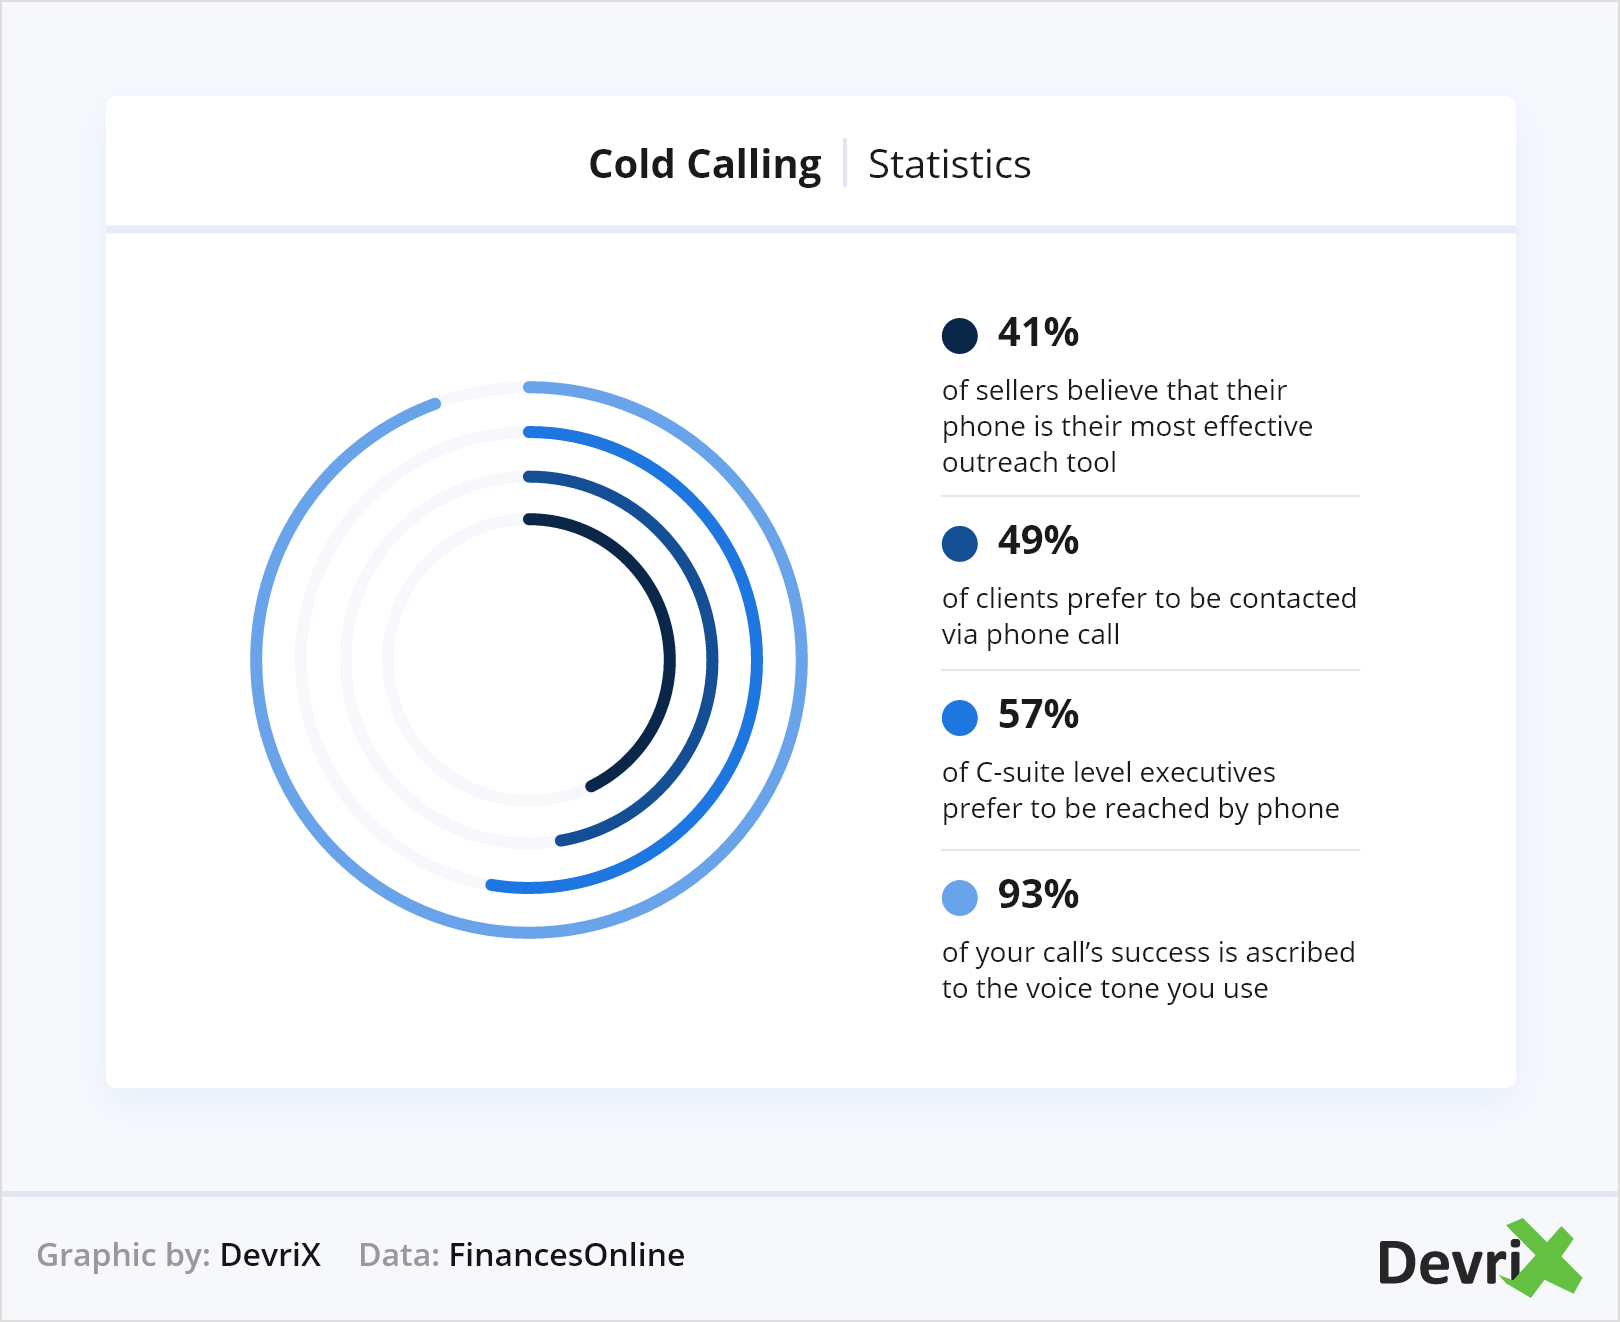 Cold calling statistics